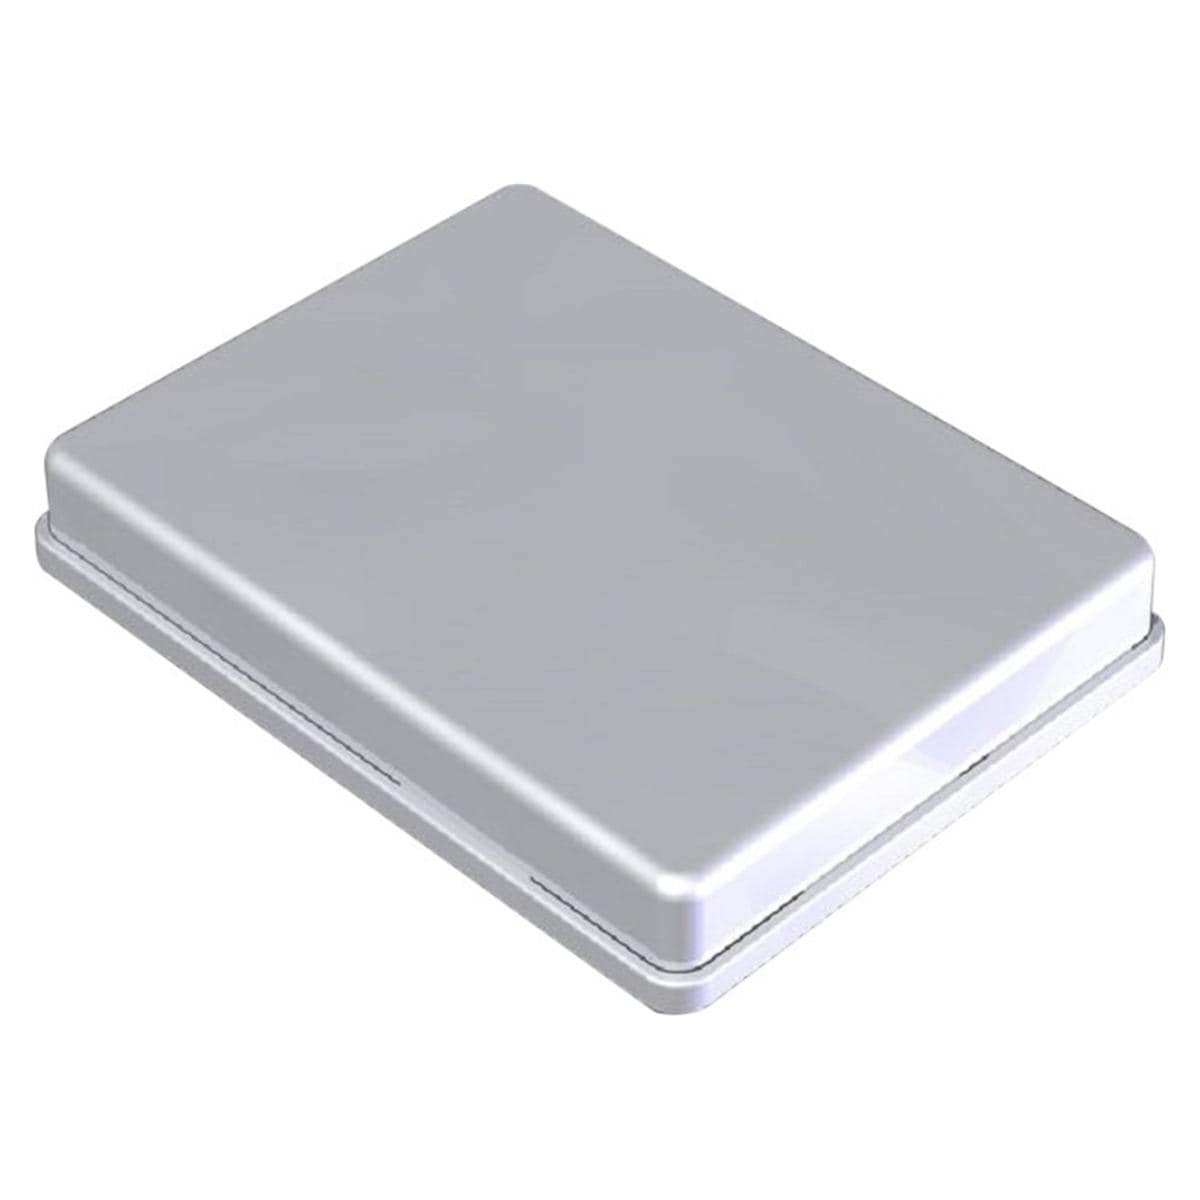 Aluminium Tray deksel - Zilver, voor tray 28 x 18 cm